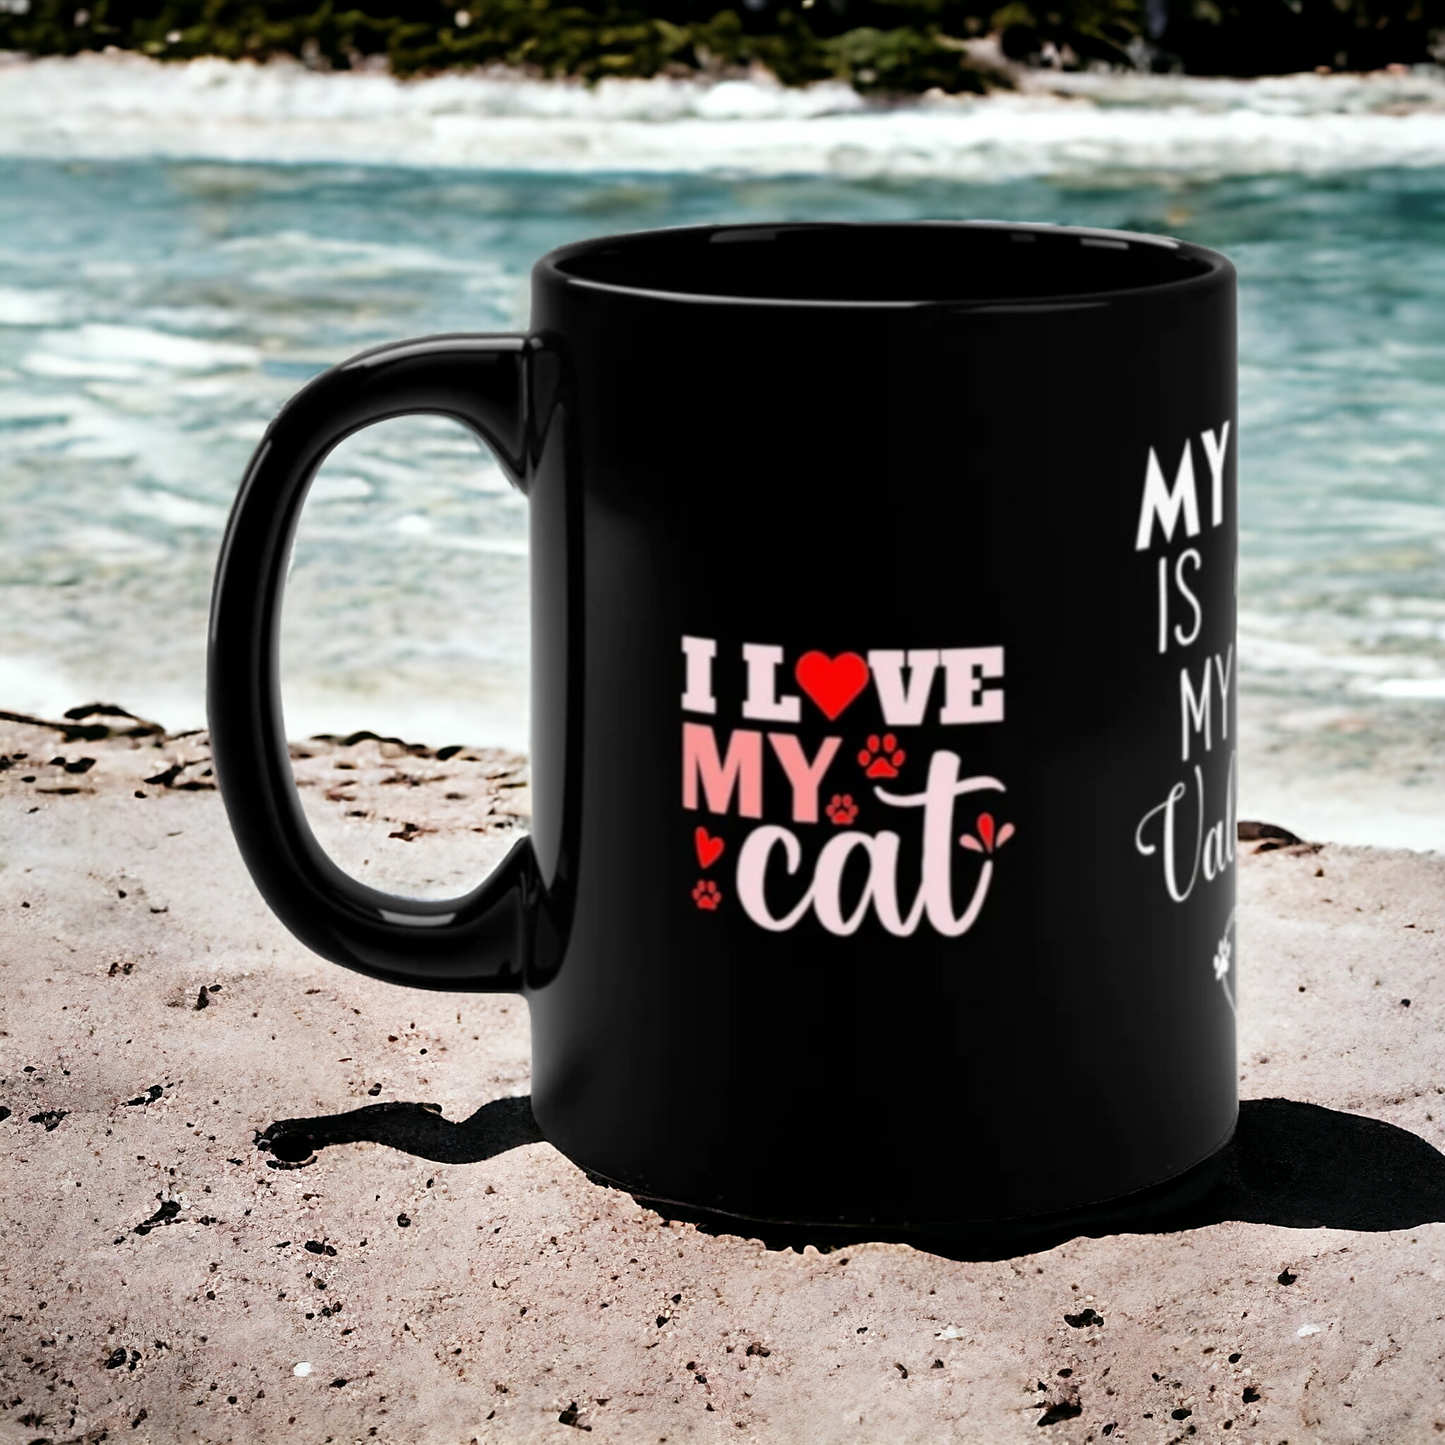 VALENTINE CAT MUG - My Cat is my Valentine Coffee Mug - Mugscity